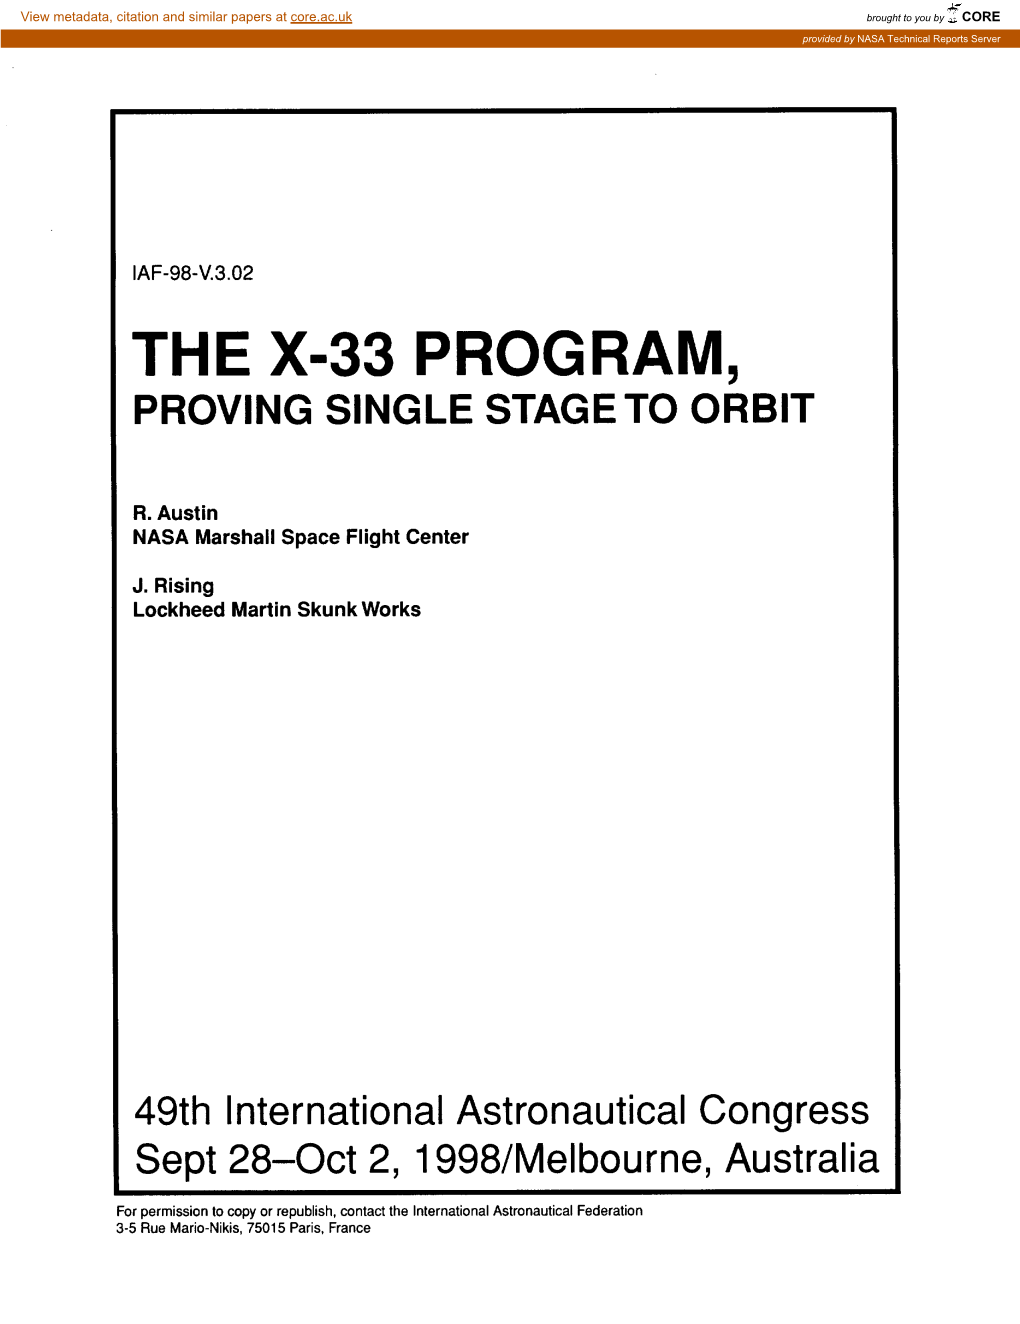 Th X-33 Program, Proving Single Stage to Orbit